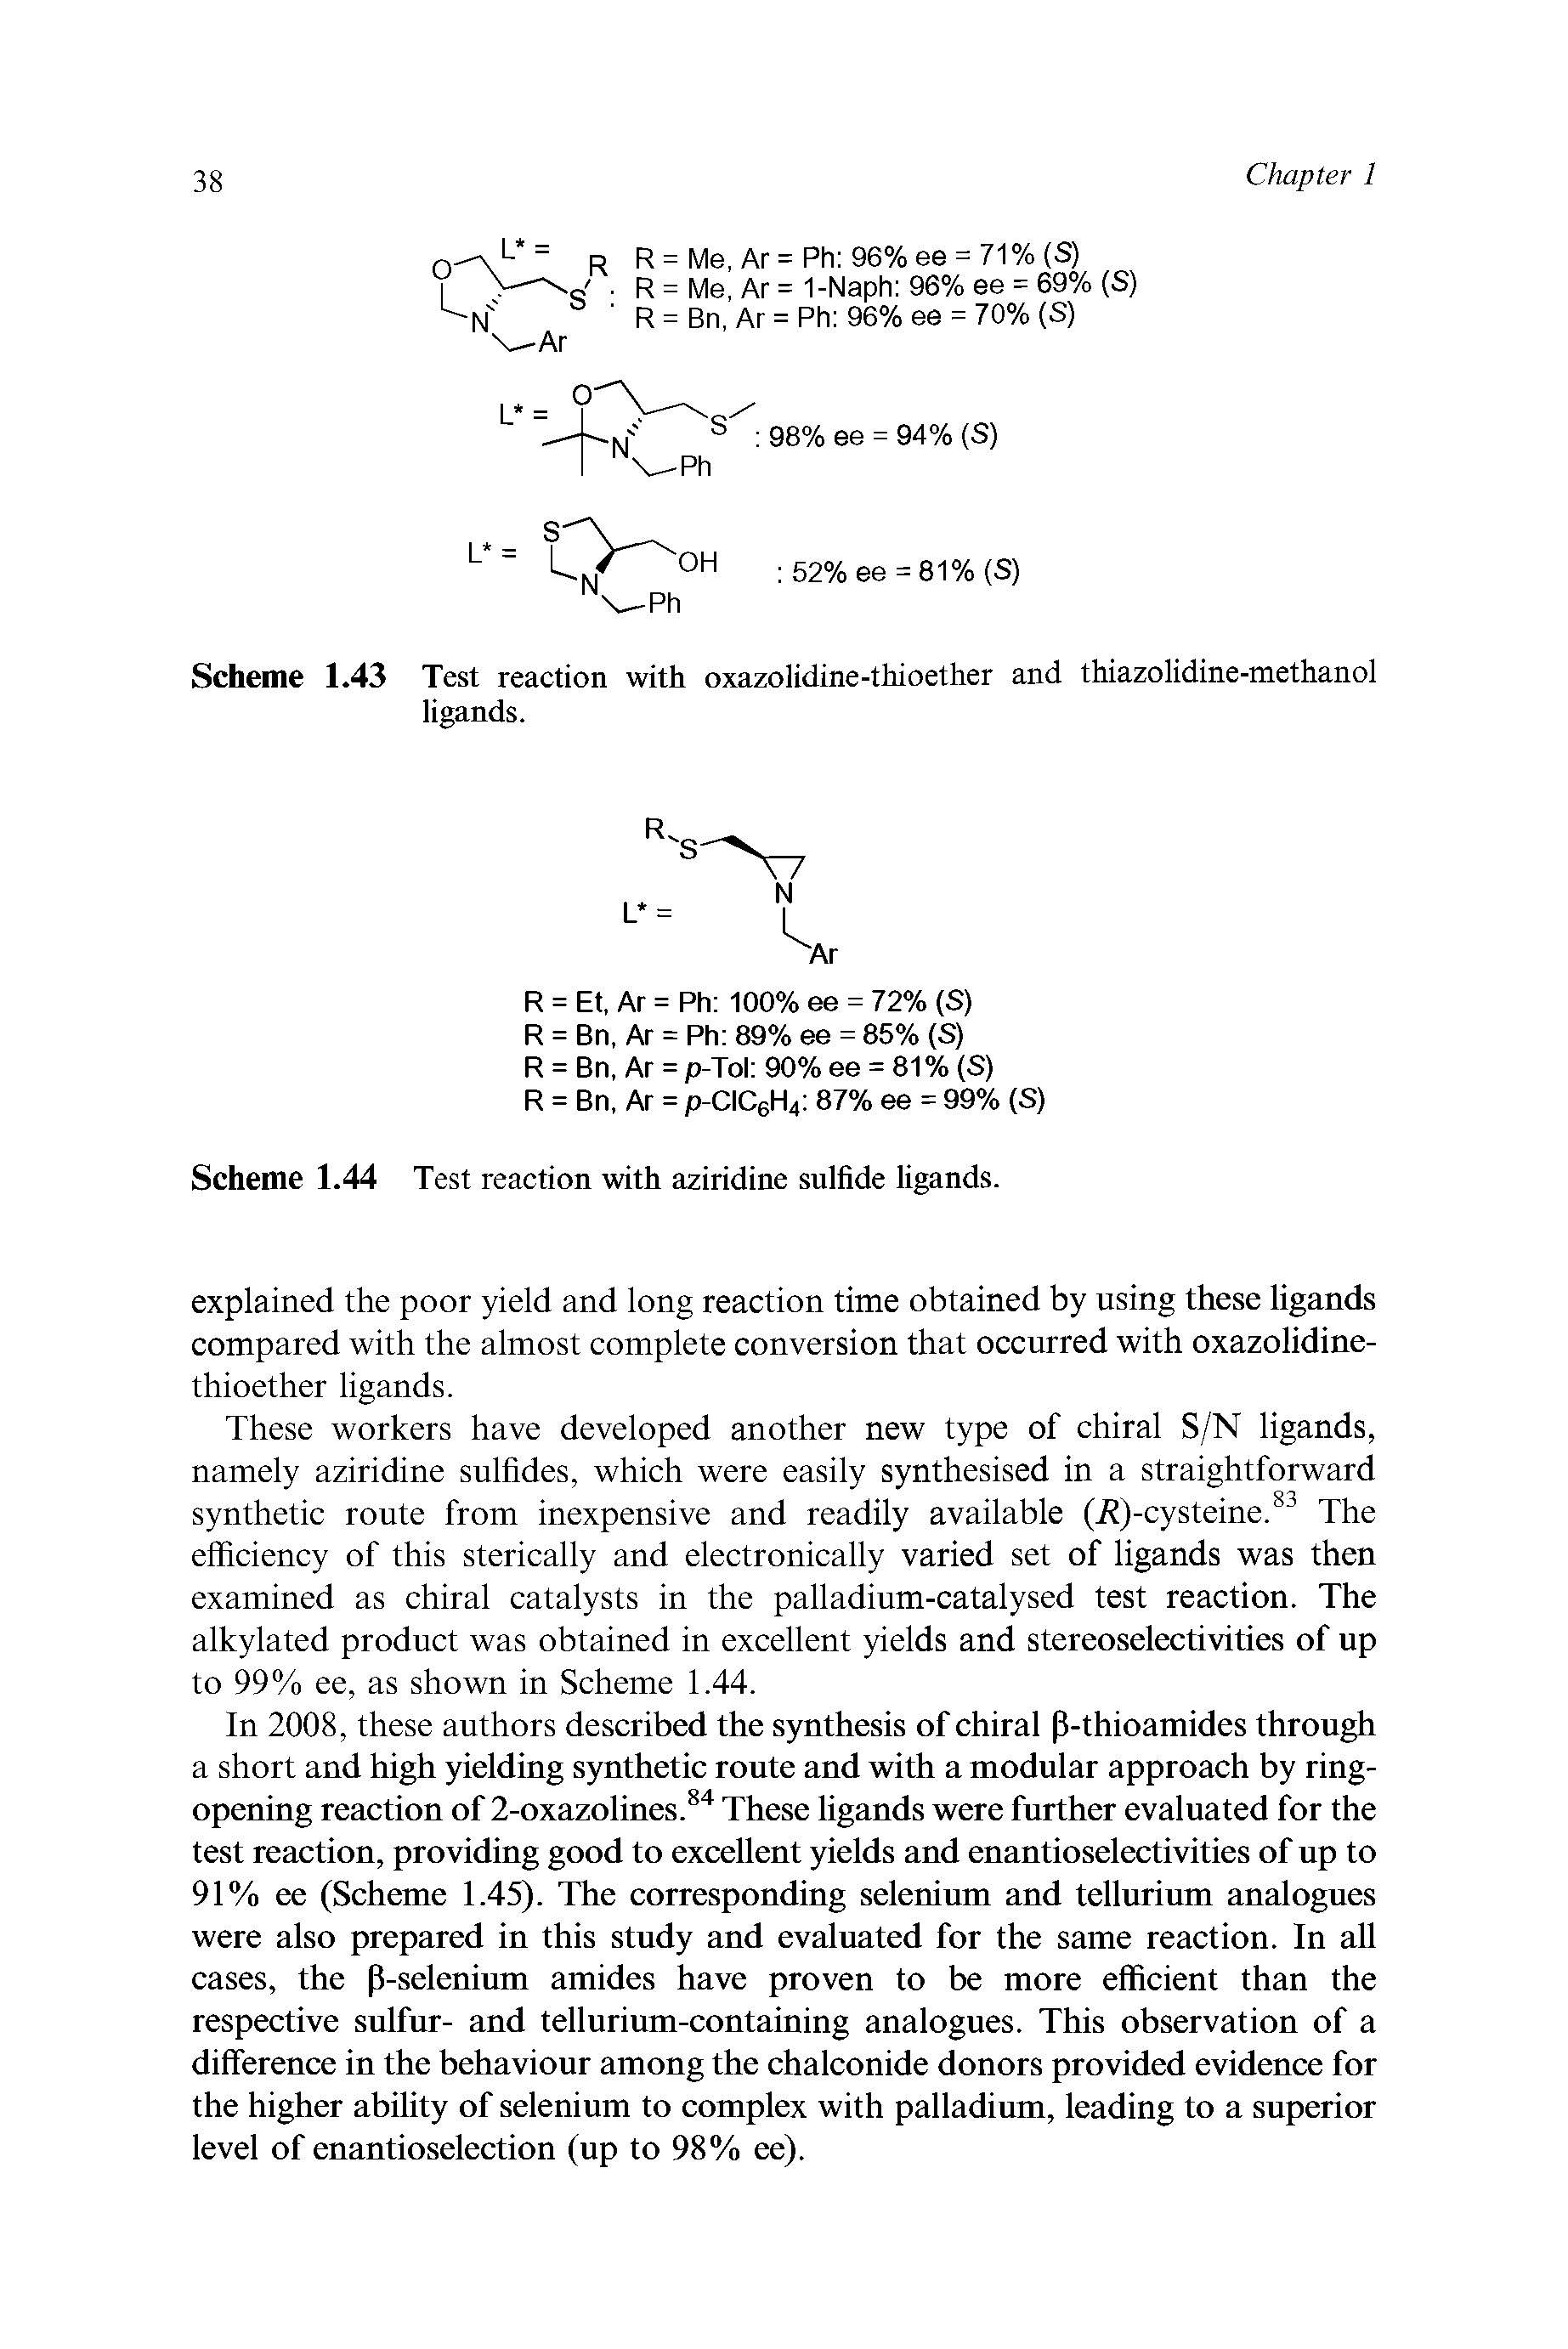 Scheme 1.43 Test reaction with oxazolidine-thioether and thiazolidine-methanol ligands.